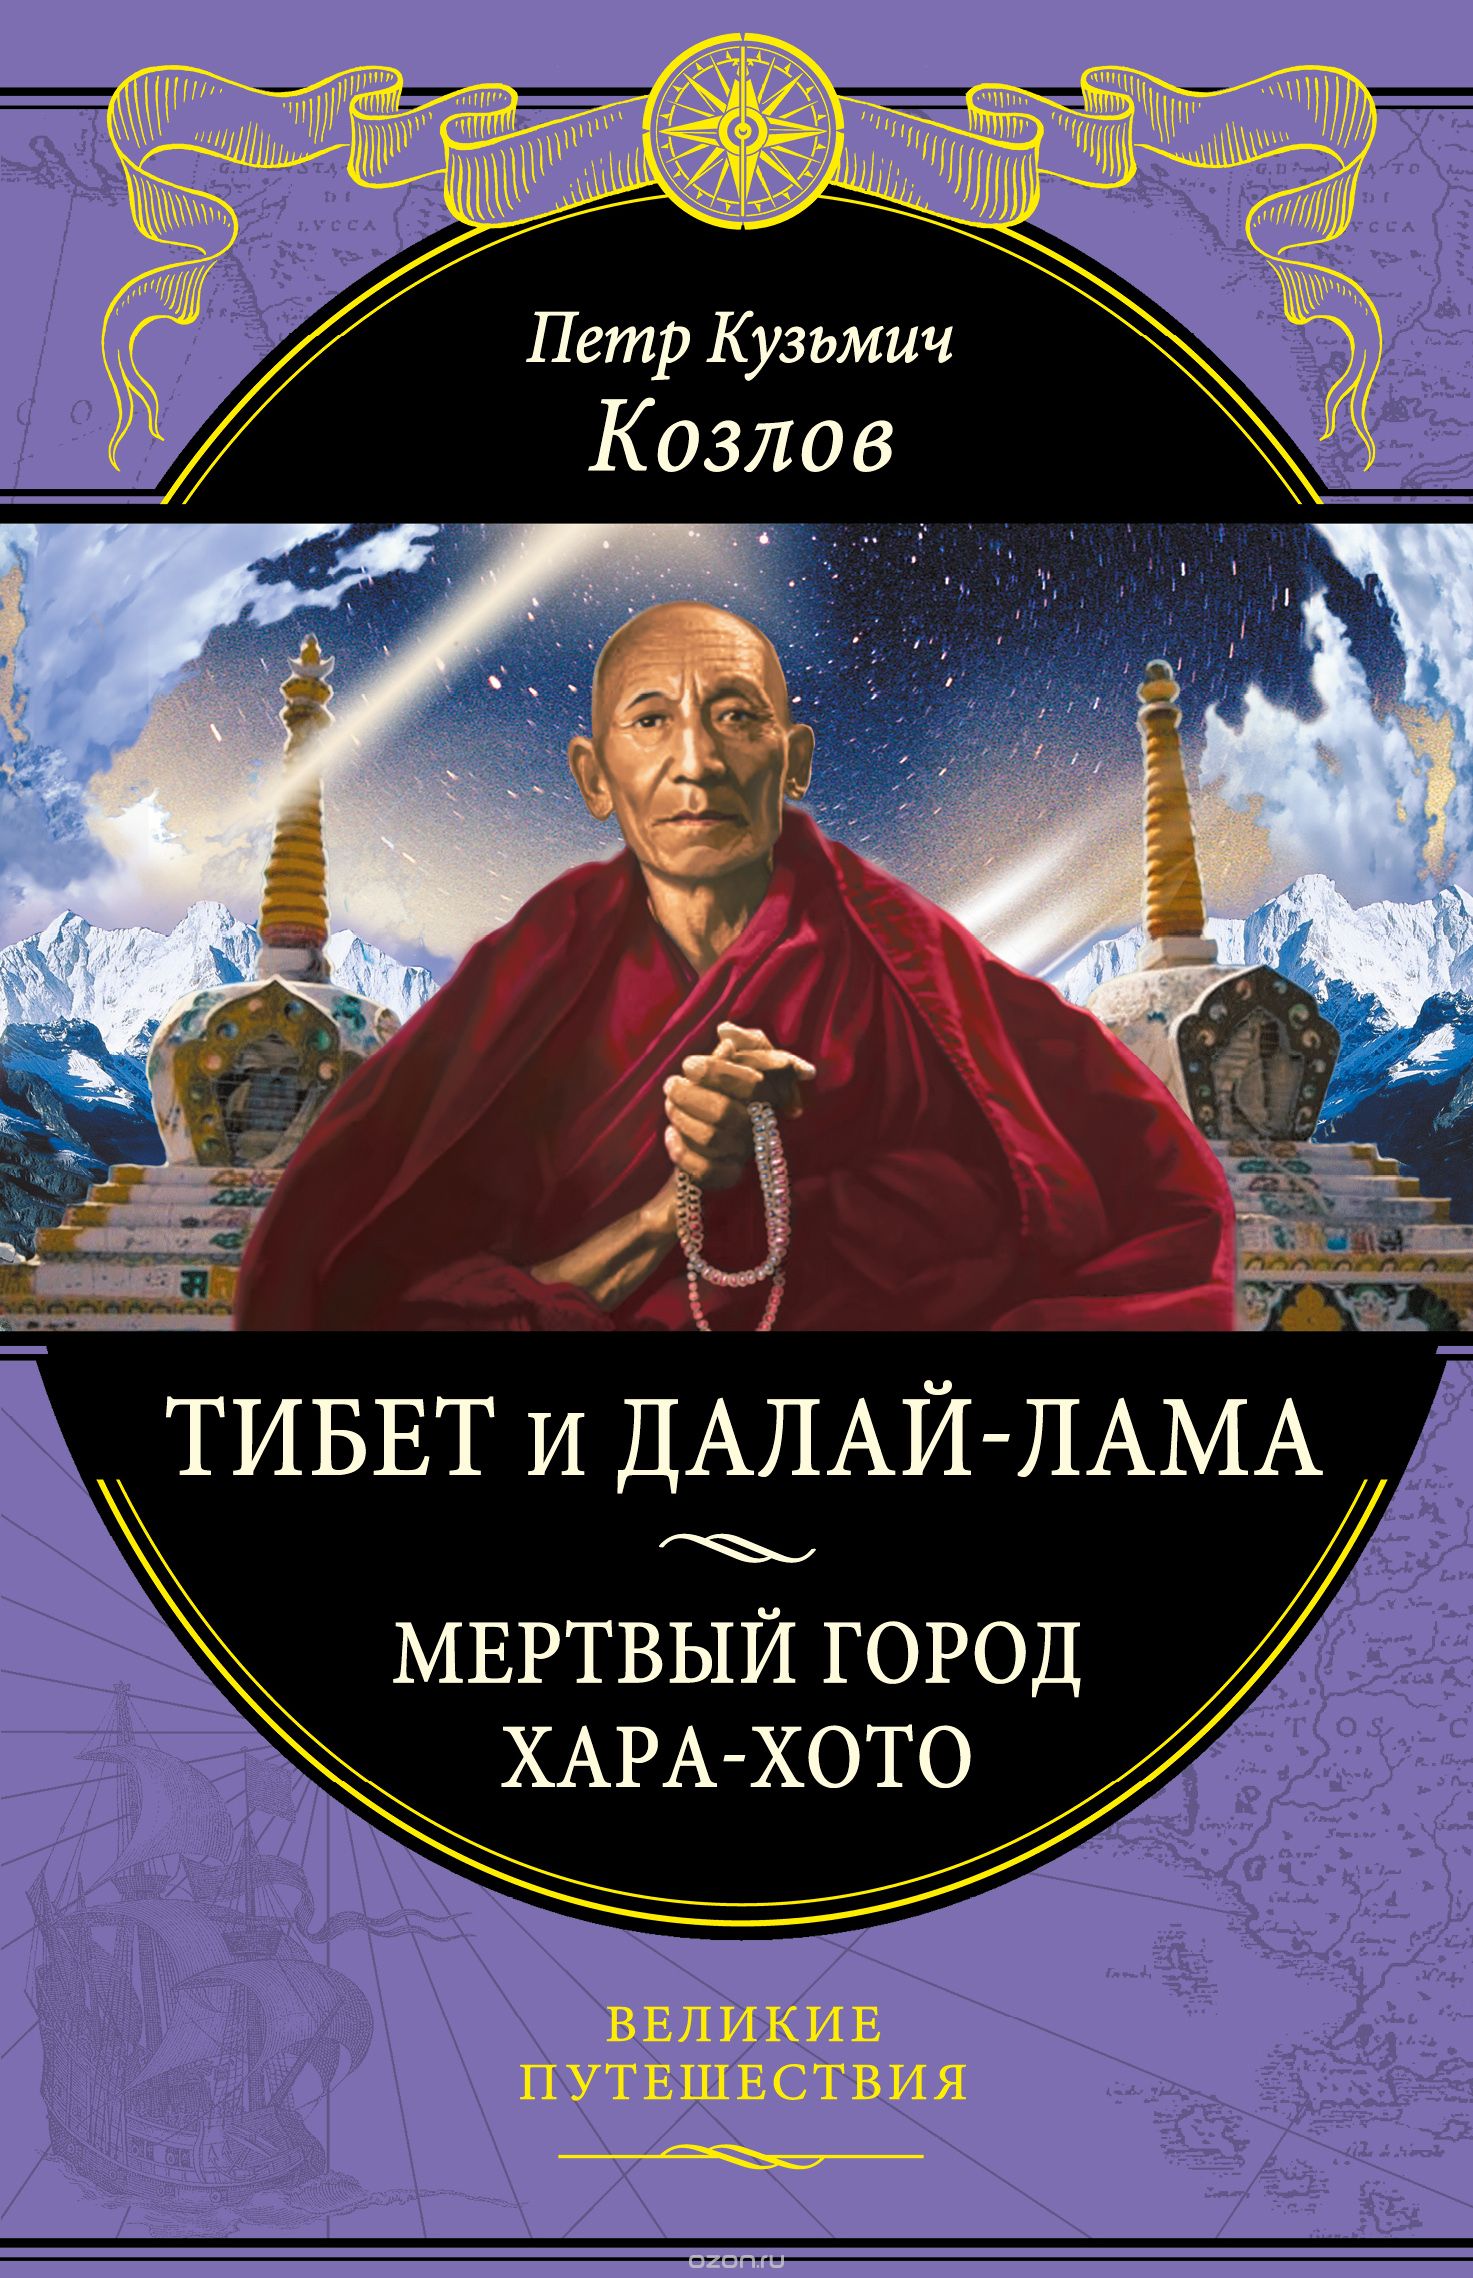 Скачать книгу "Тибет и Далай-лама. Мертвый город Хара-Хото, Петр Кузьмич Козлов"